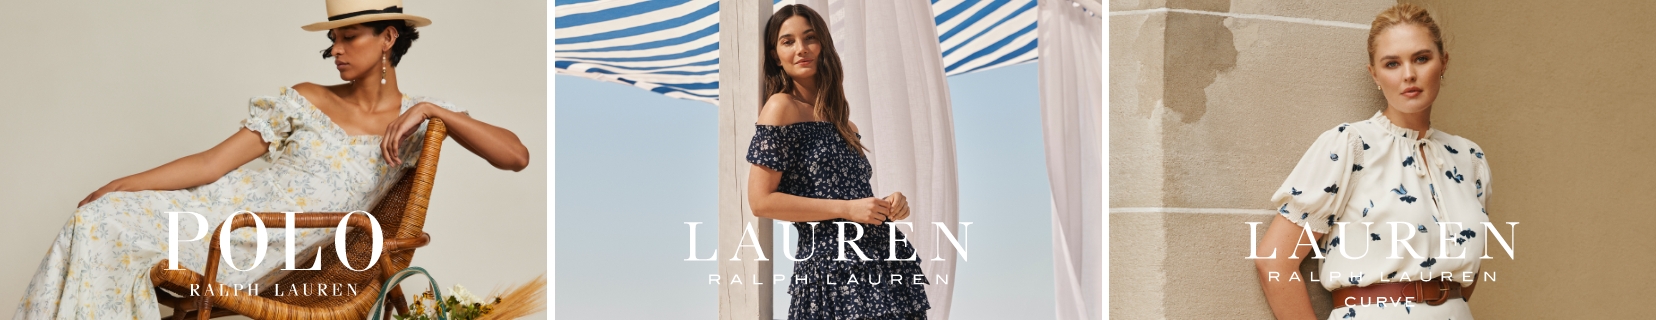 Ralph Lauren Skirts for women - Buy online at Boozt.com